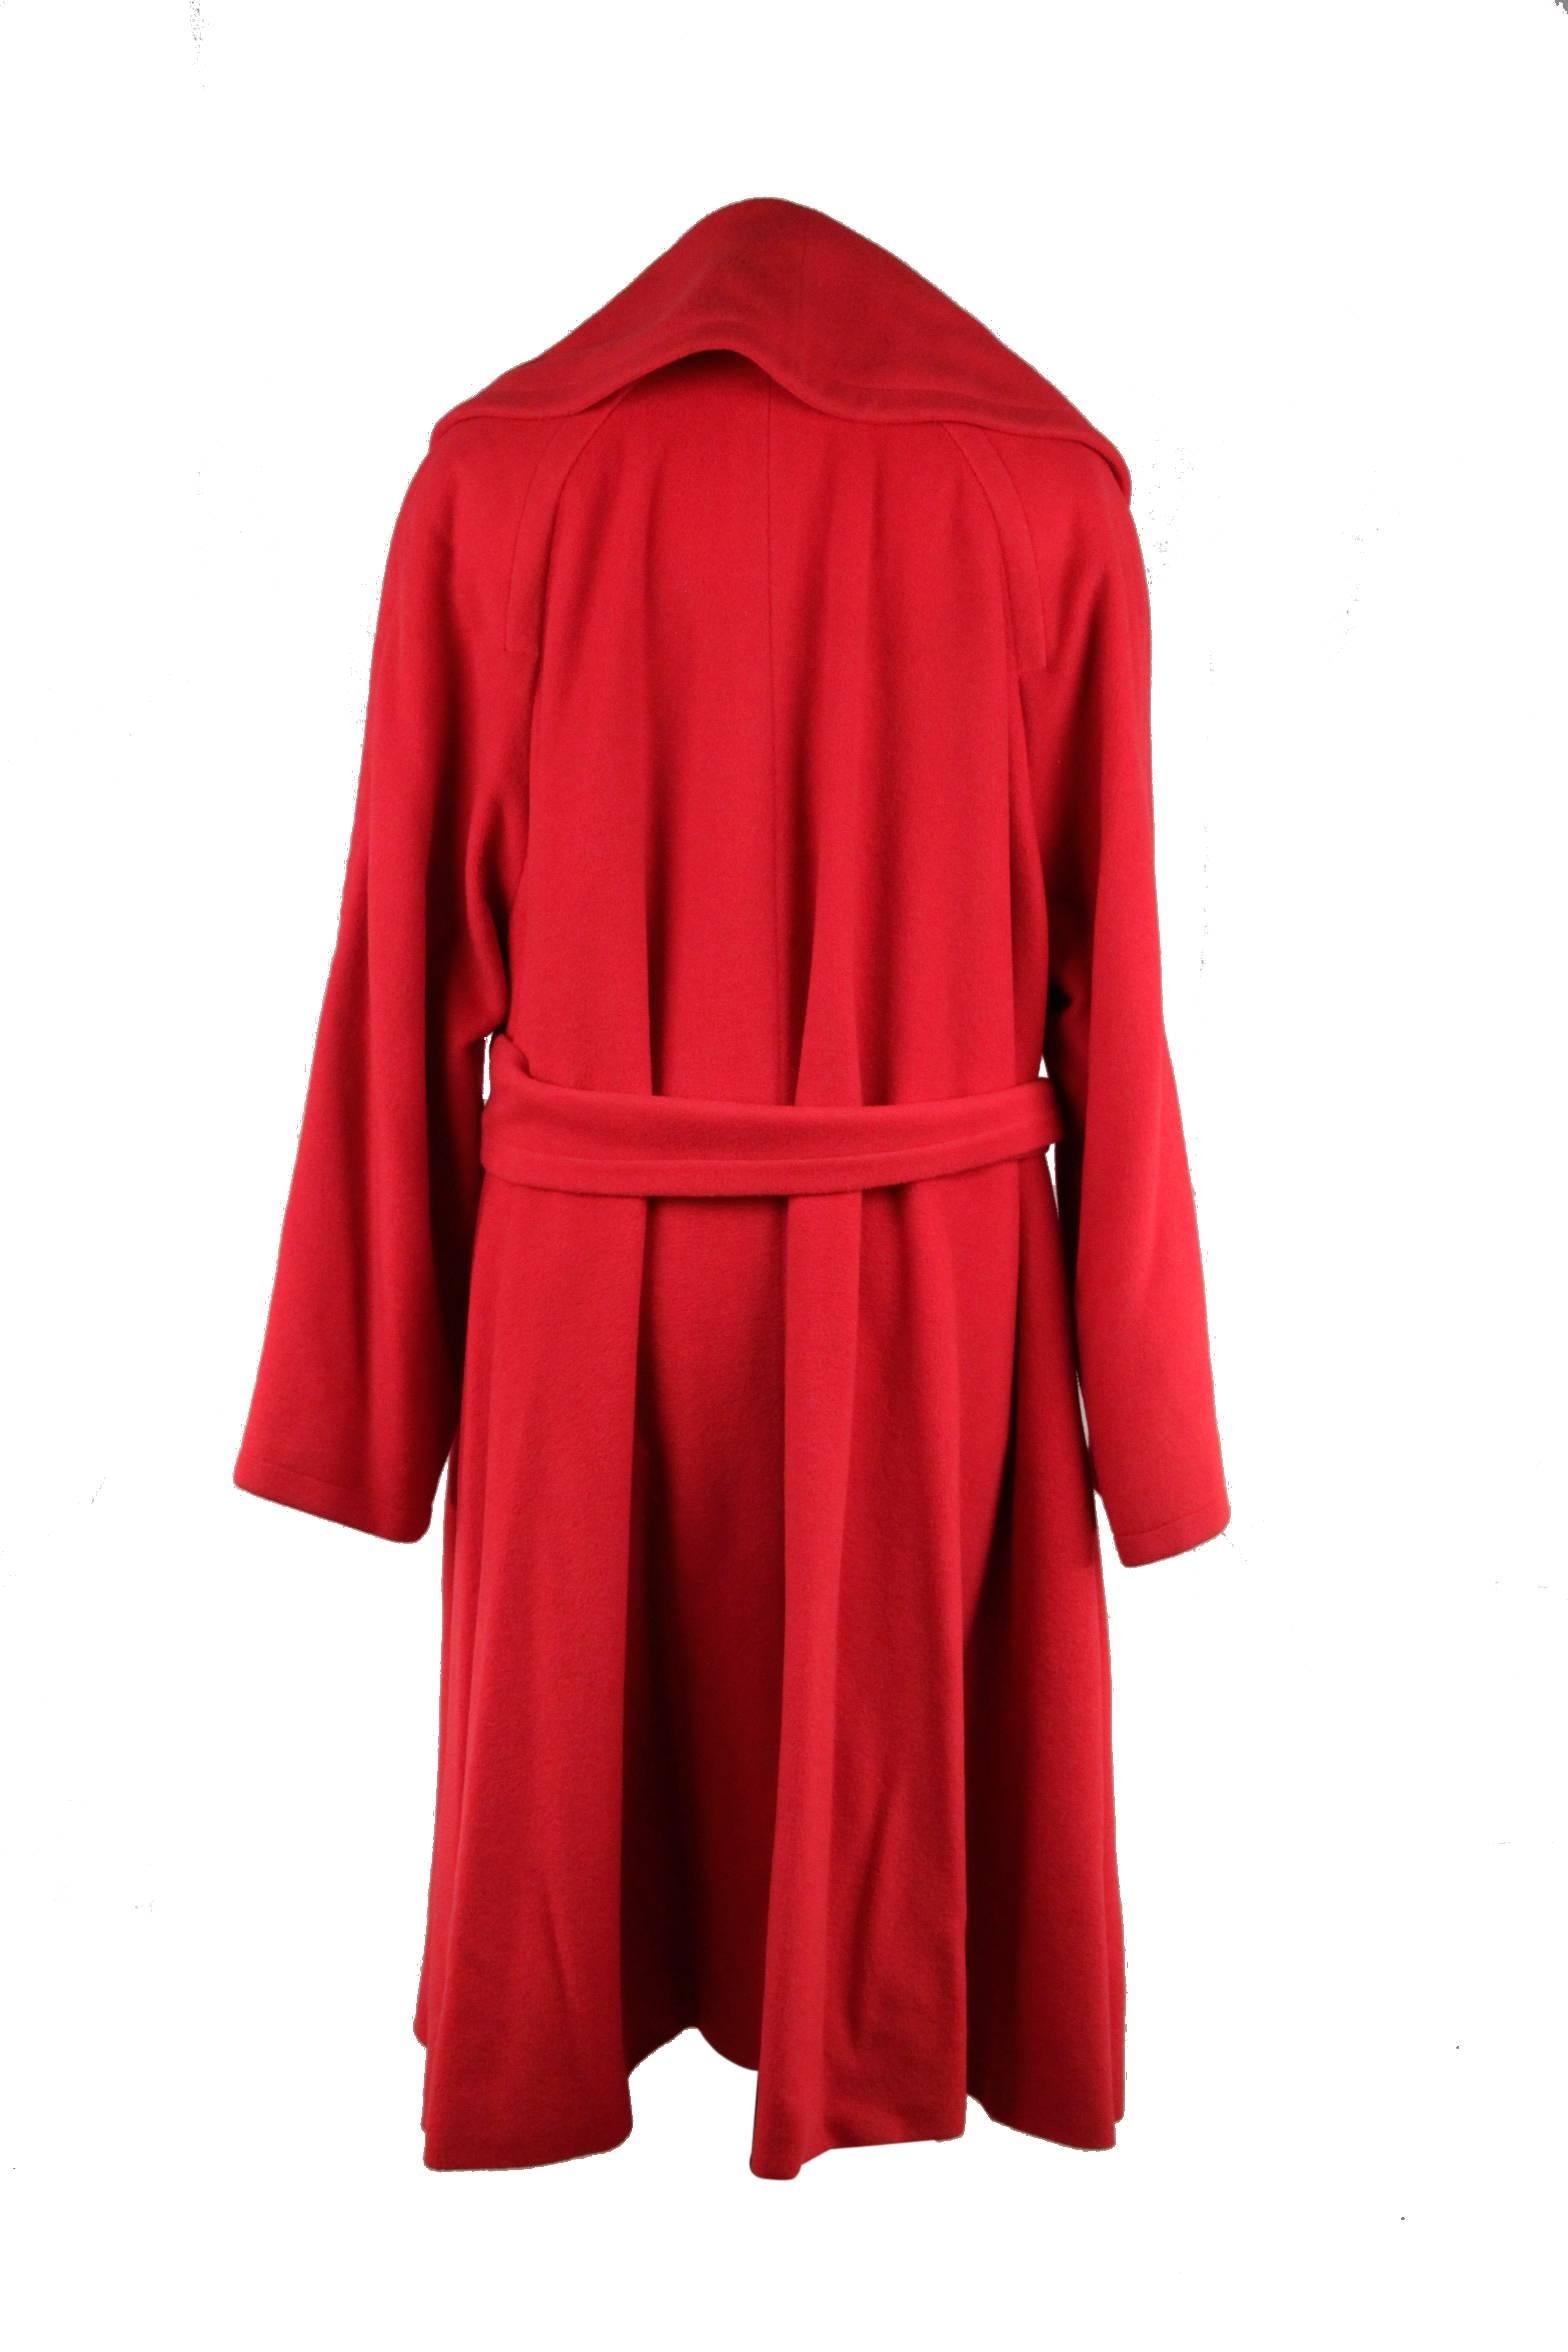 CELINE Vintage Red Wool COAT w/ Self-Tie Belt SIZE 42 1